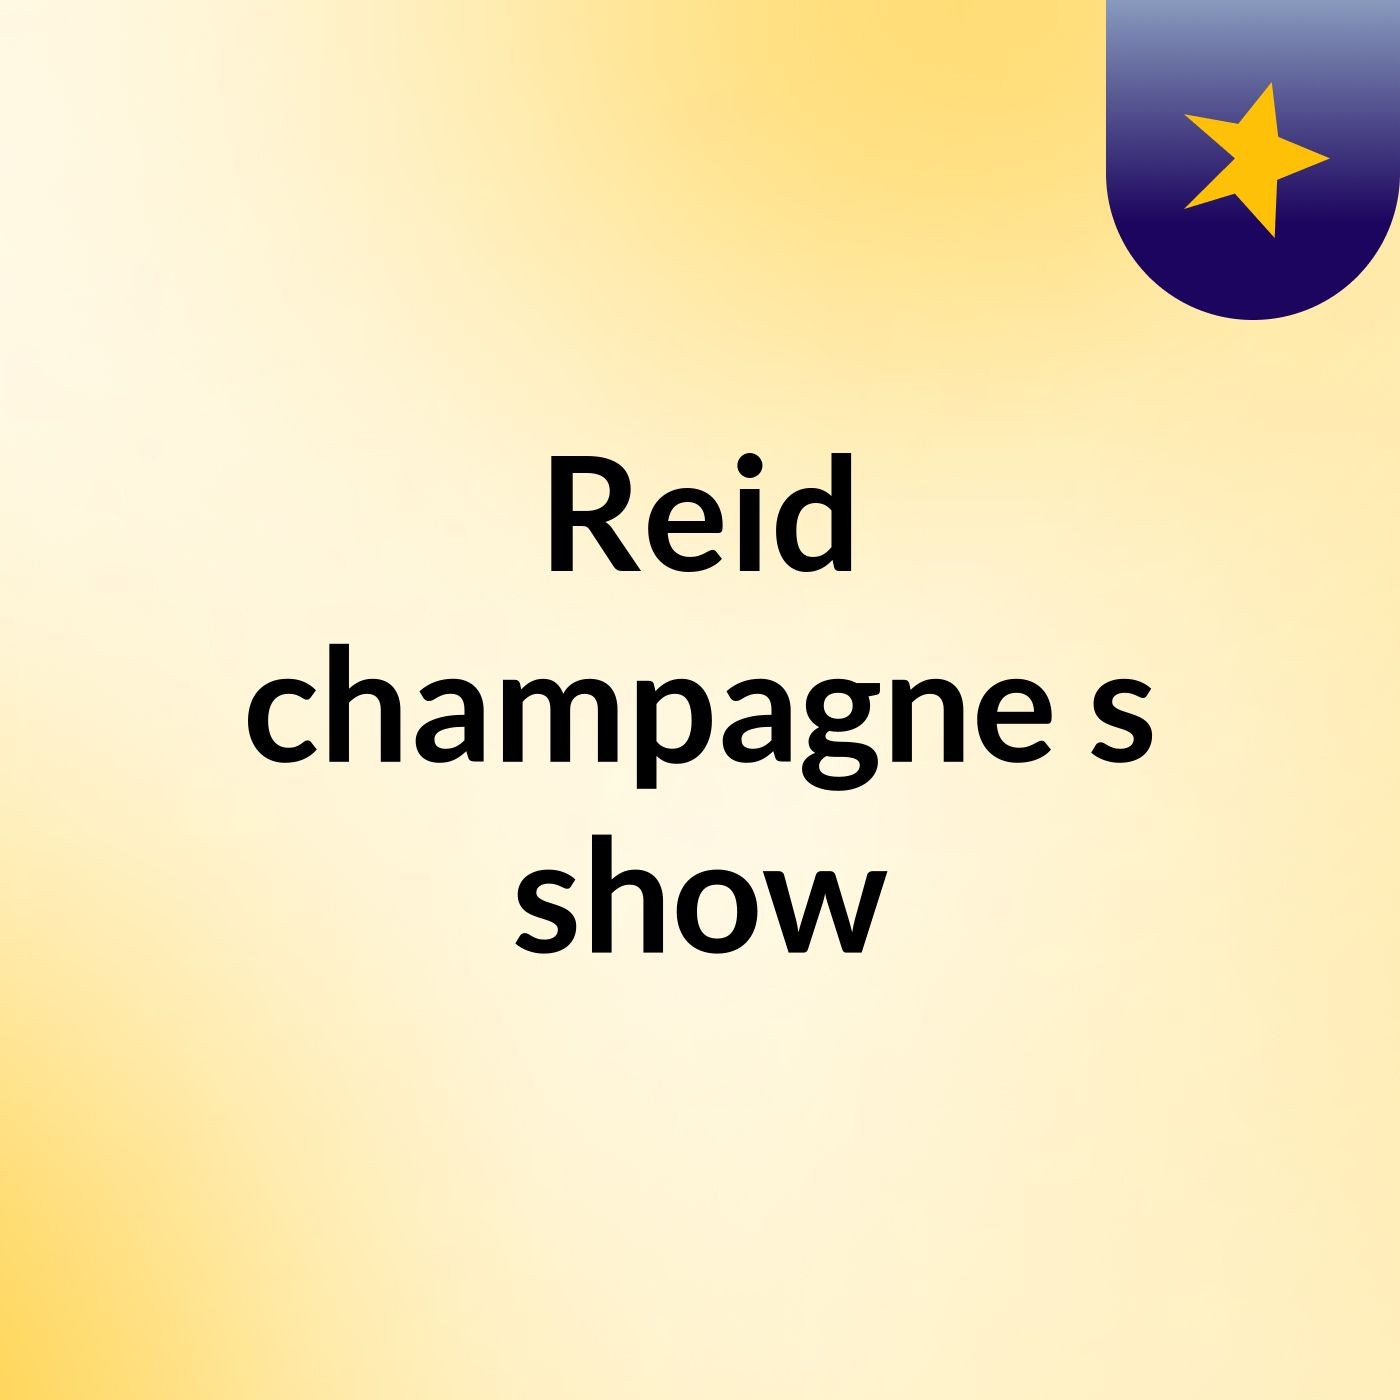 Reid champagne's show